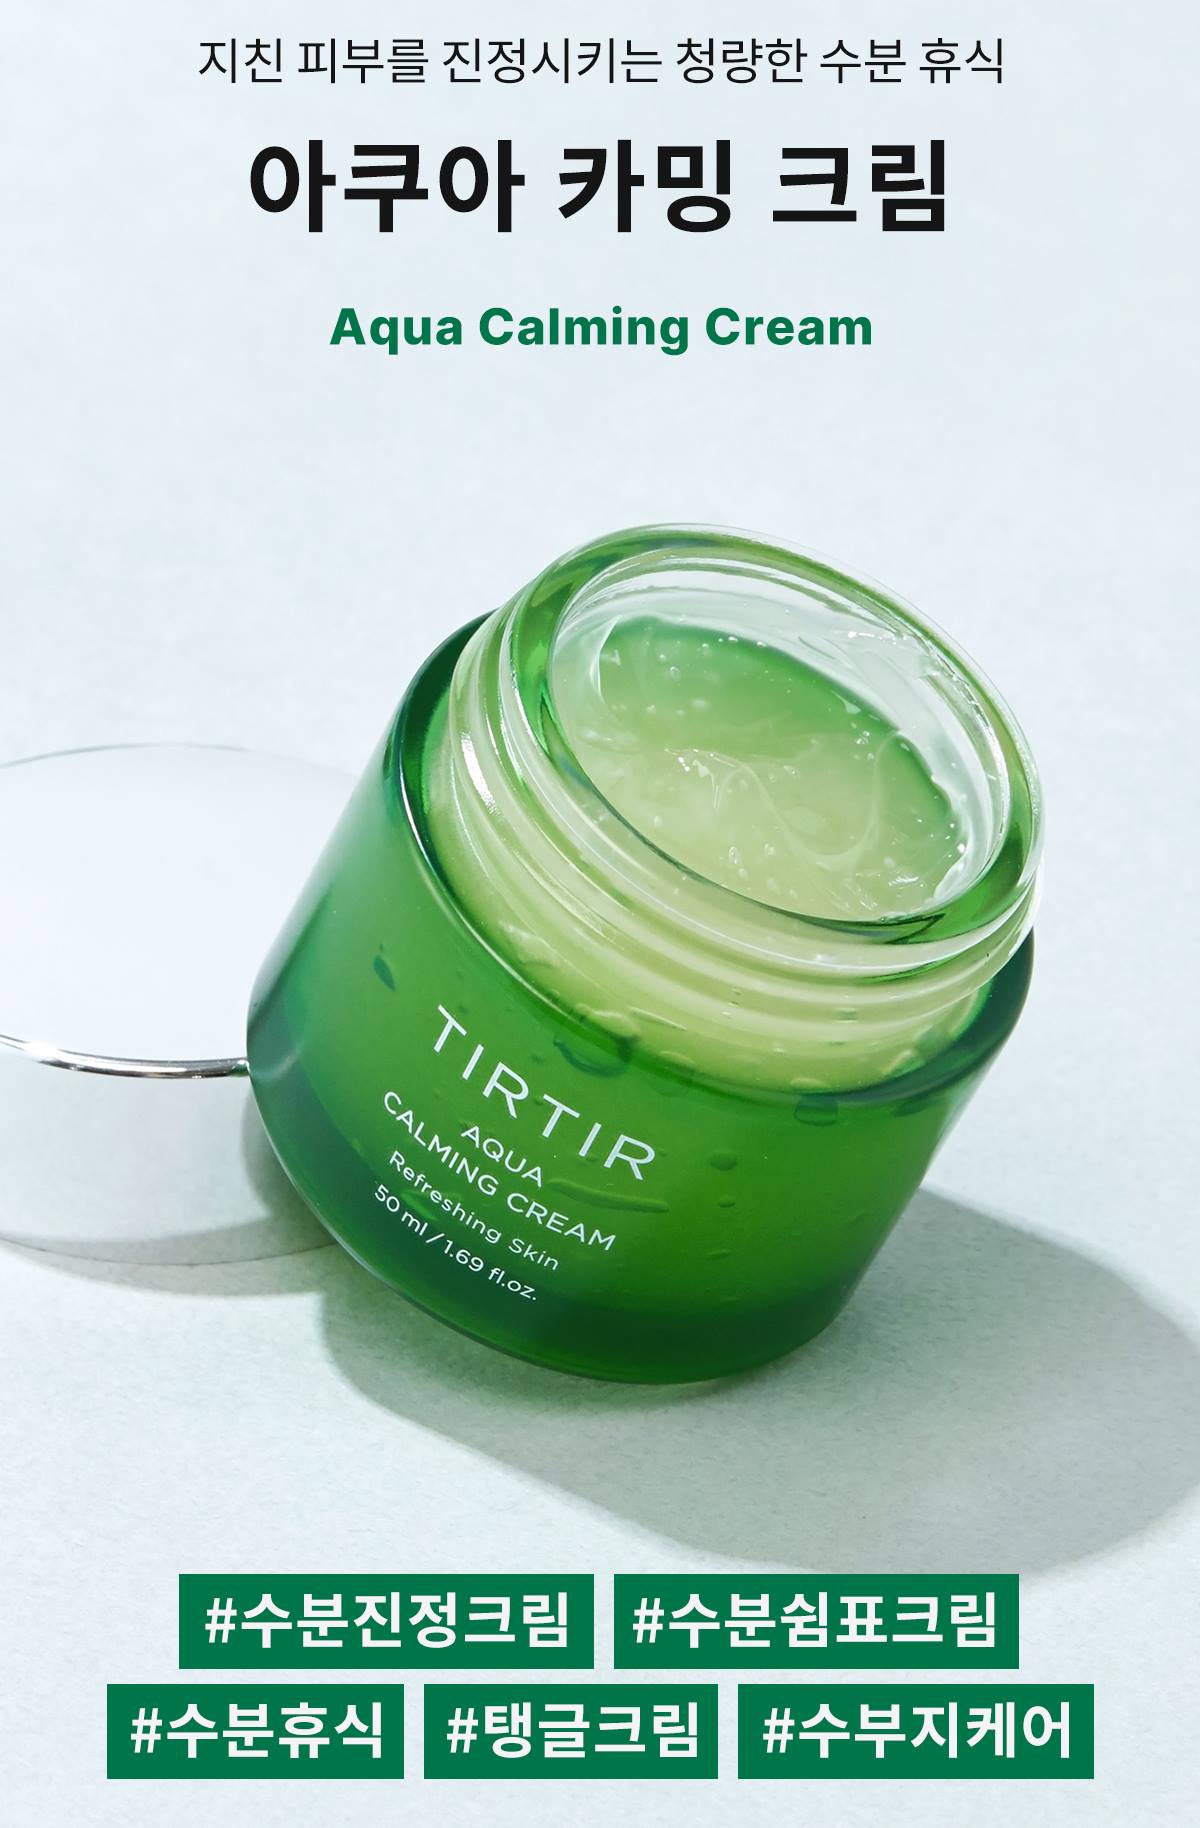 TIRTIR Aqua Calming Cream 1.69 fl.oz Centella asiatica moisturizing